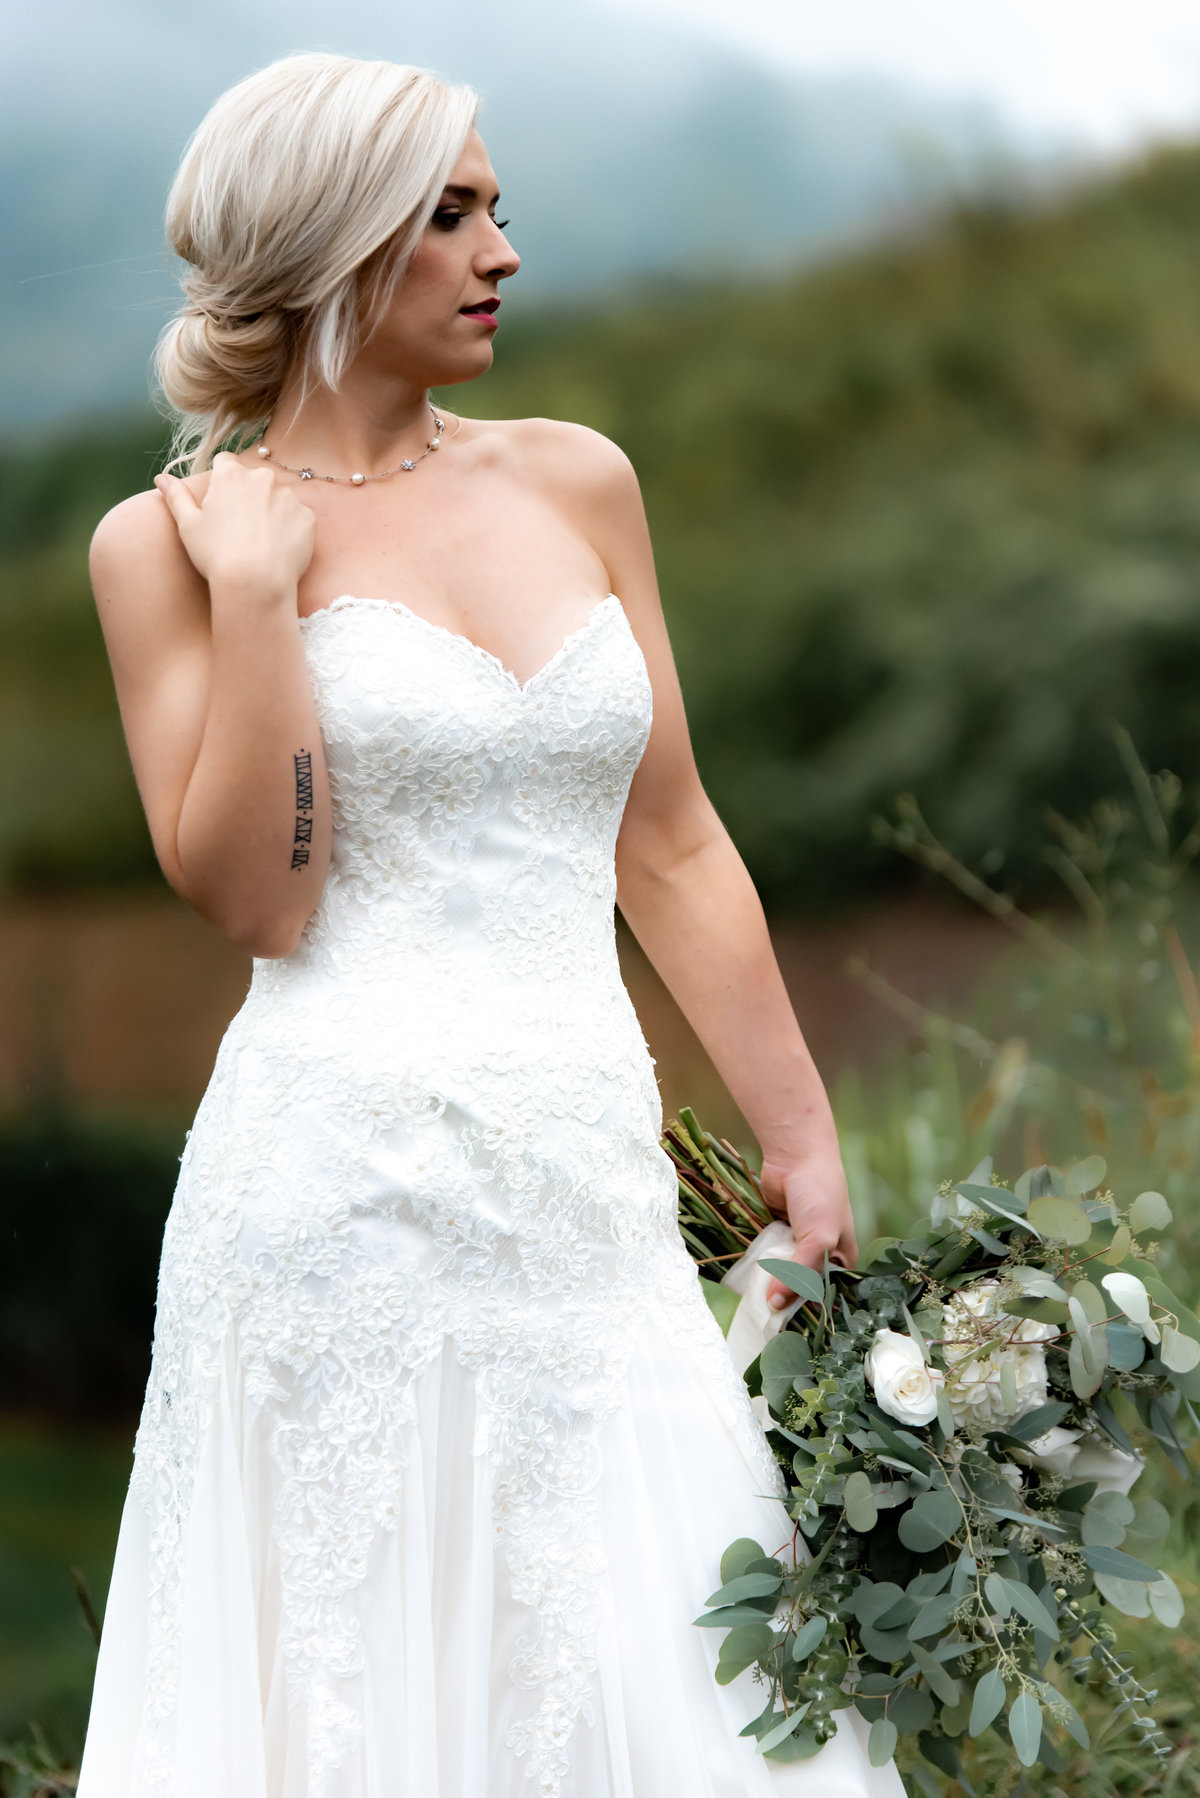 Stunning bride at Delfosse Vinary. Richmond wedding photographers